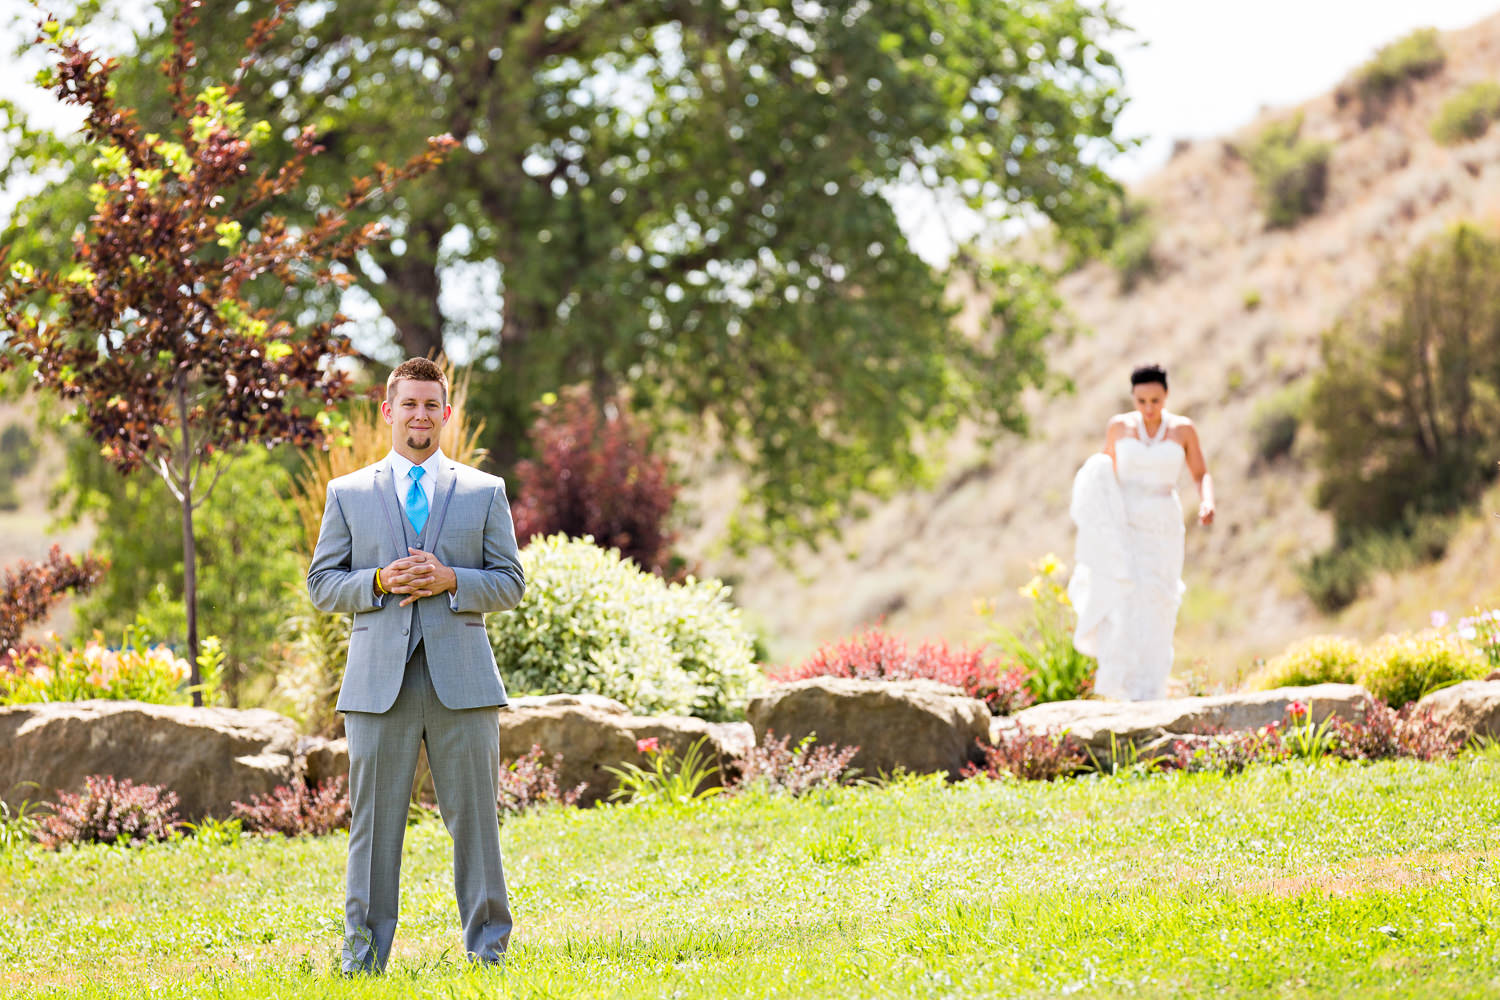 billings-montana-chanceys-wedding-first-look-bride-approaches-groom.jpg